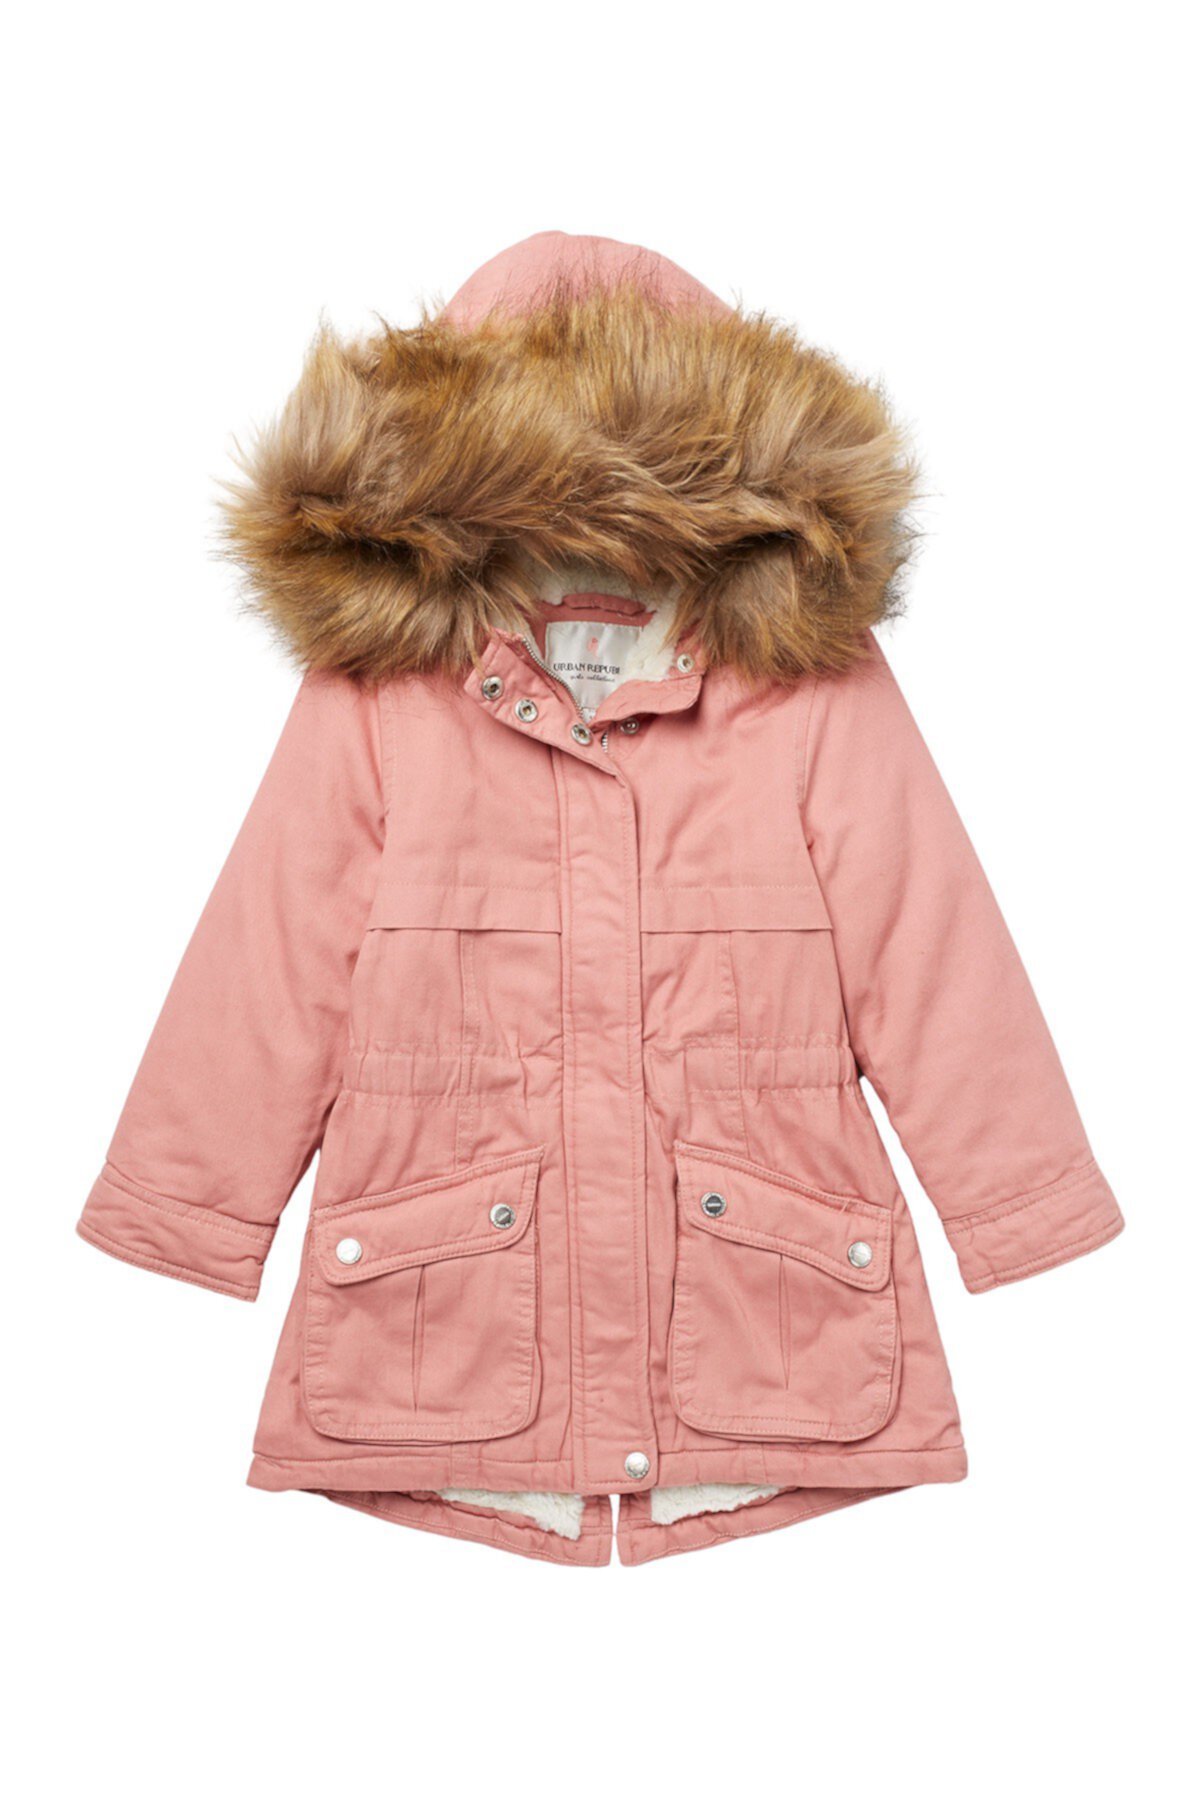 Removable Faux Fur Trimmed Anorak Jacket (Toddler Girls) Urban Republic